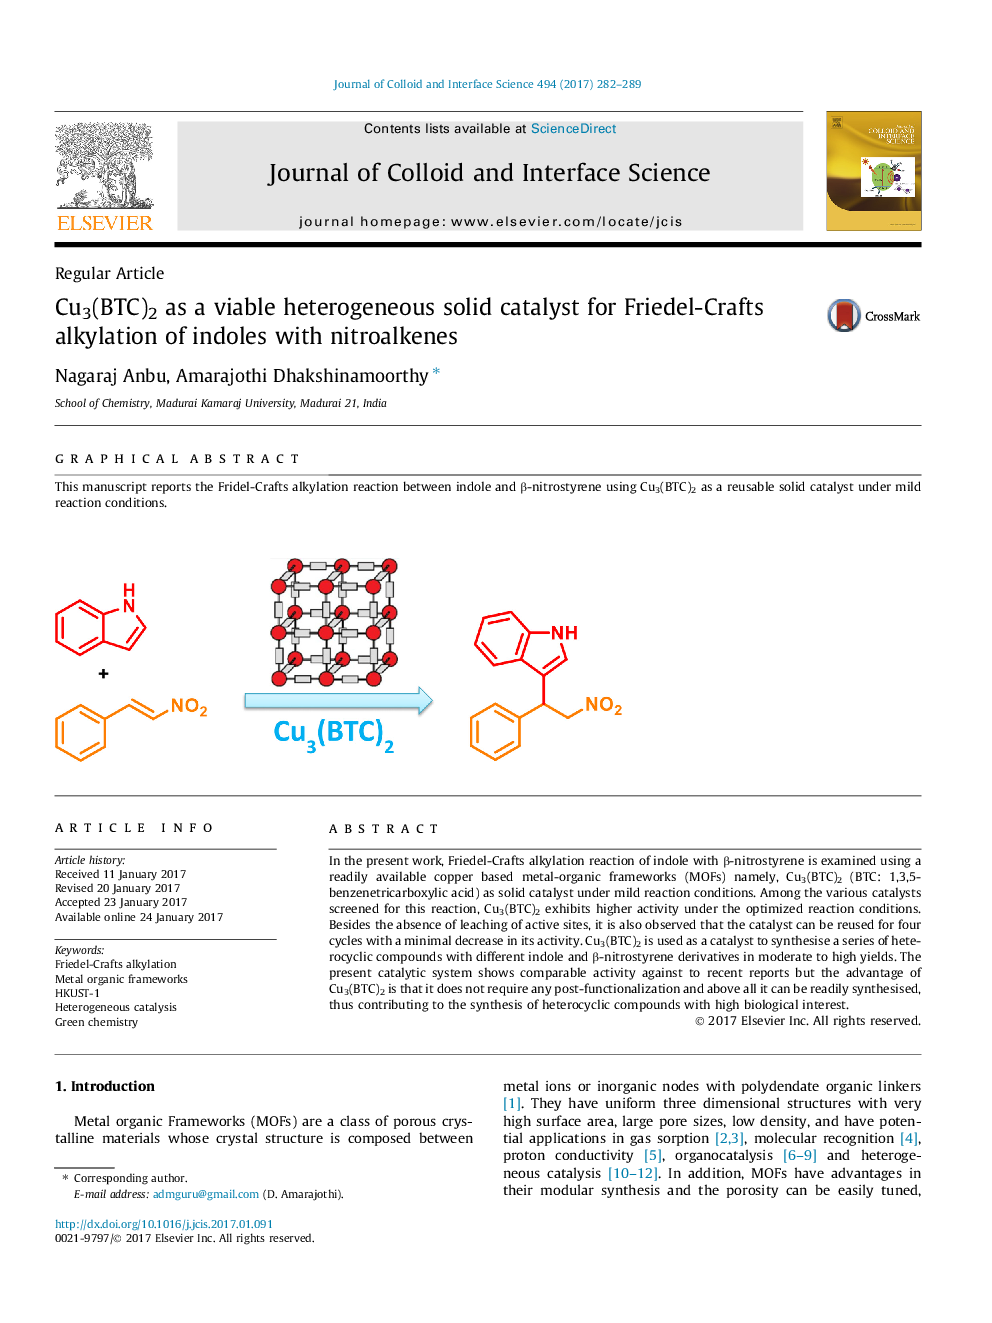 Regular ArticleCu3(BTC)2 as a viable heterogeneous solid catalyst for Friedel-Crafts alkylation of indoles with nitroalkenes